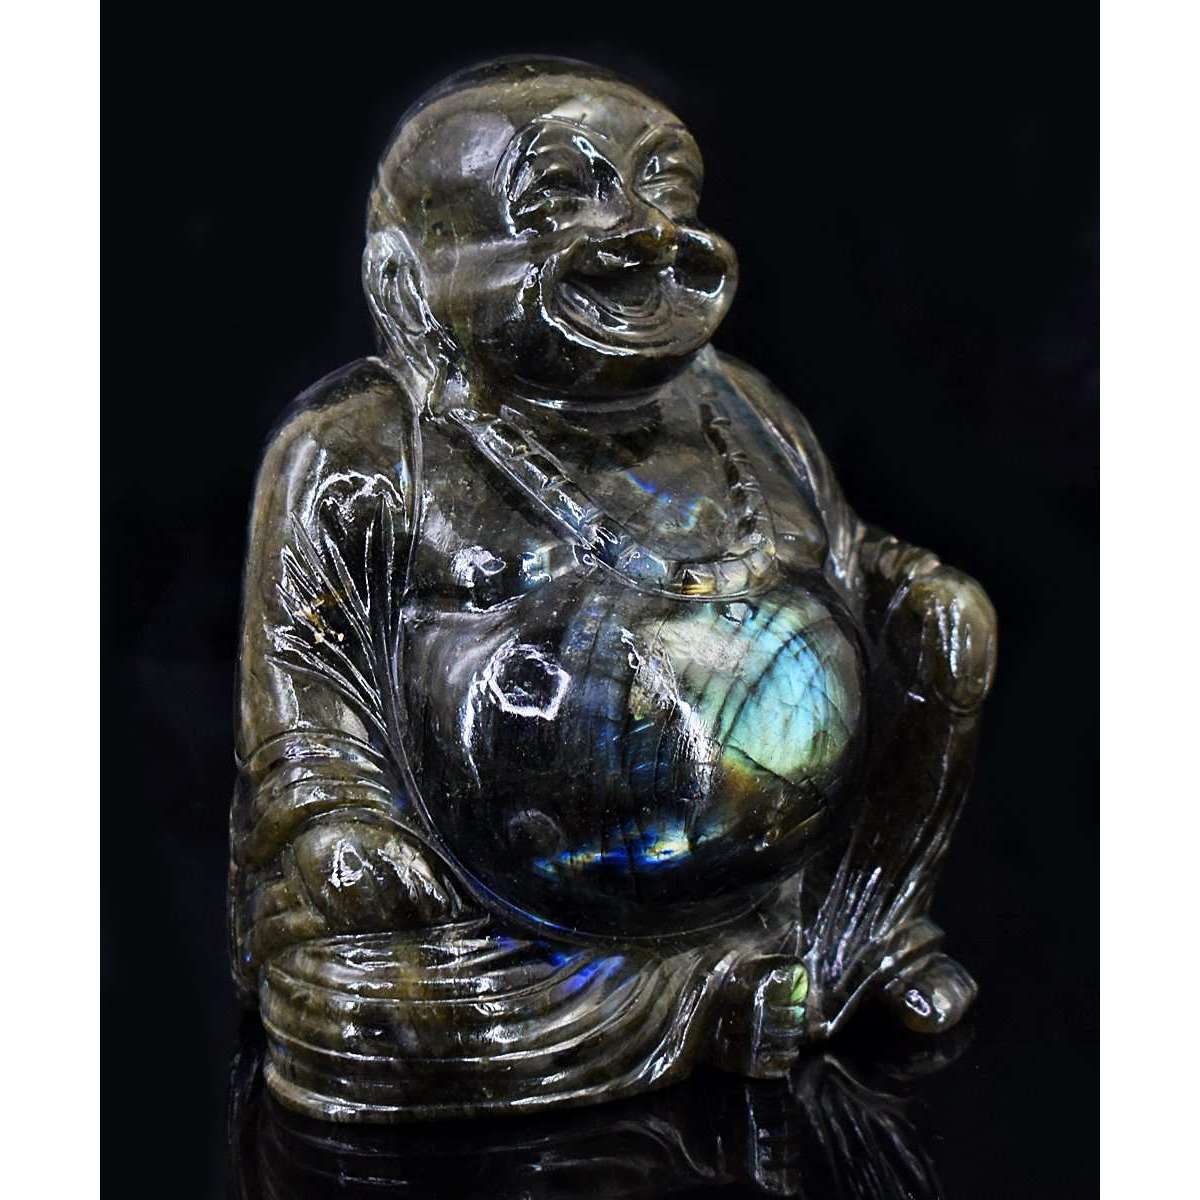 gemsmore:Exclusive Amazing Flash Labradorite Hand Carved Laughing Buddha